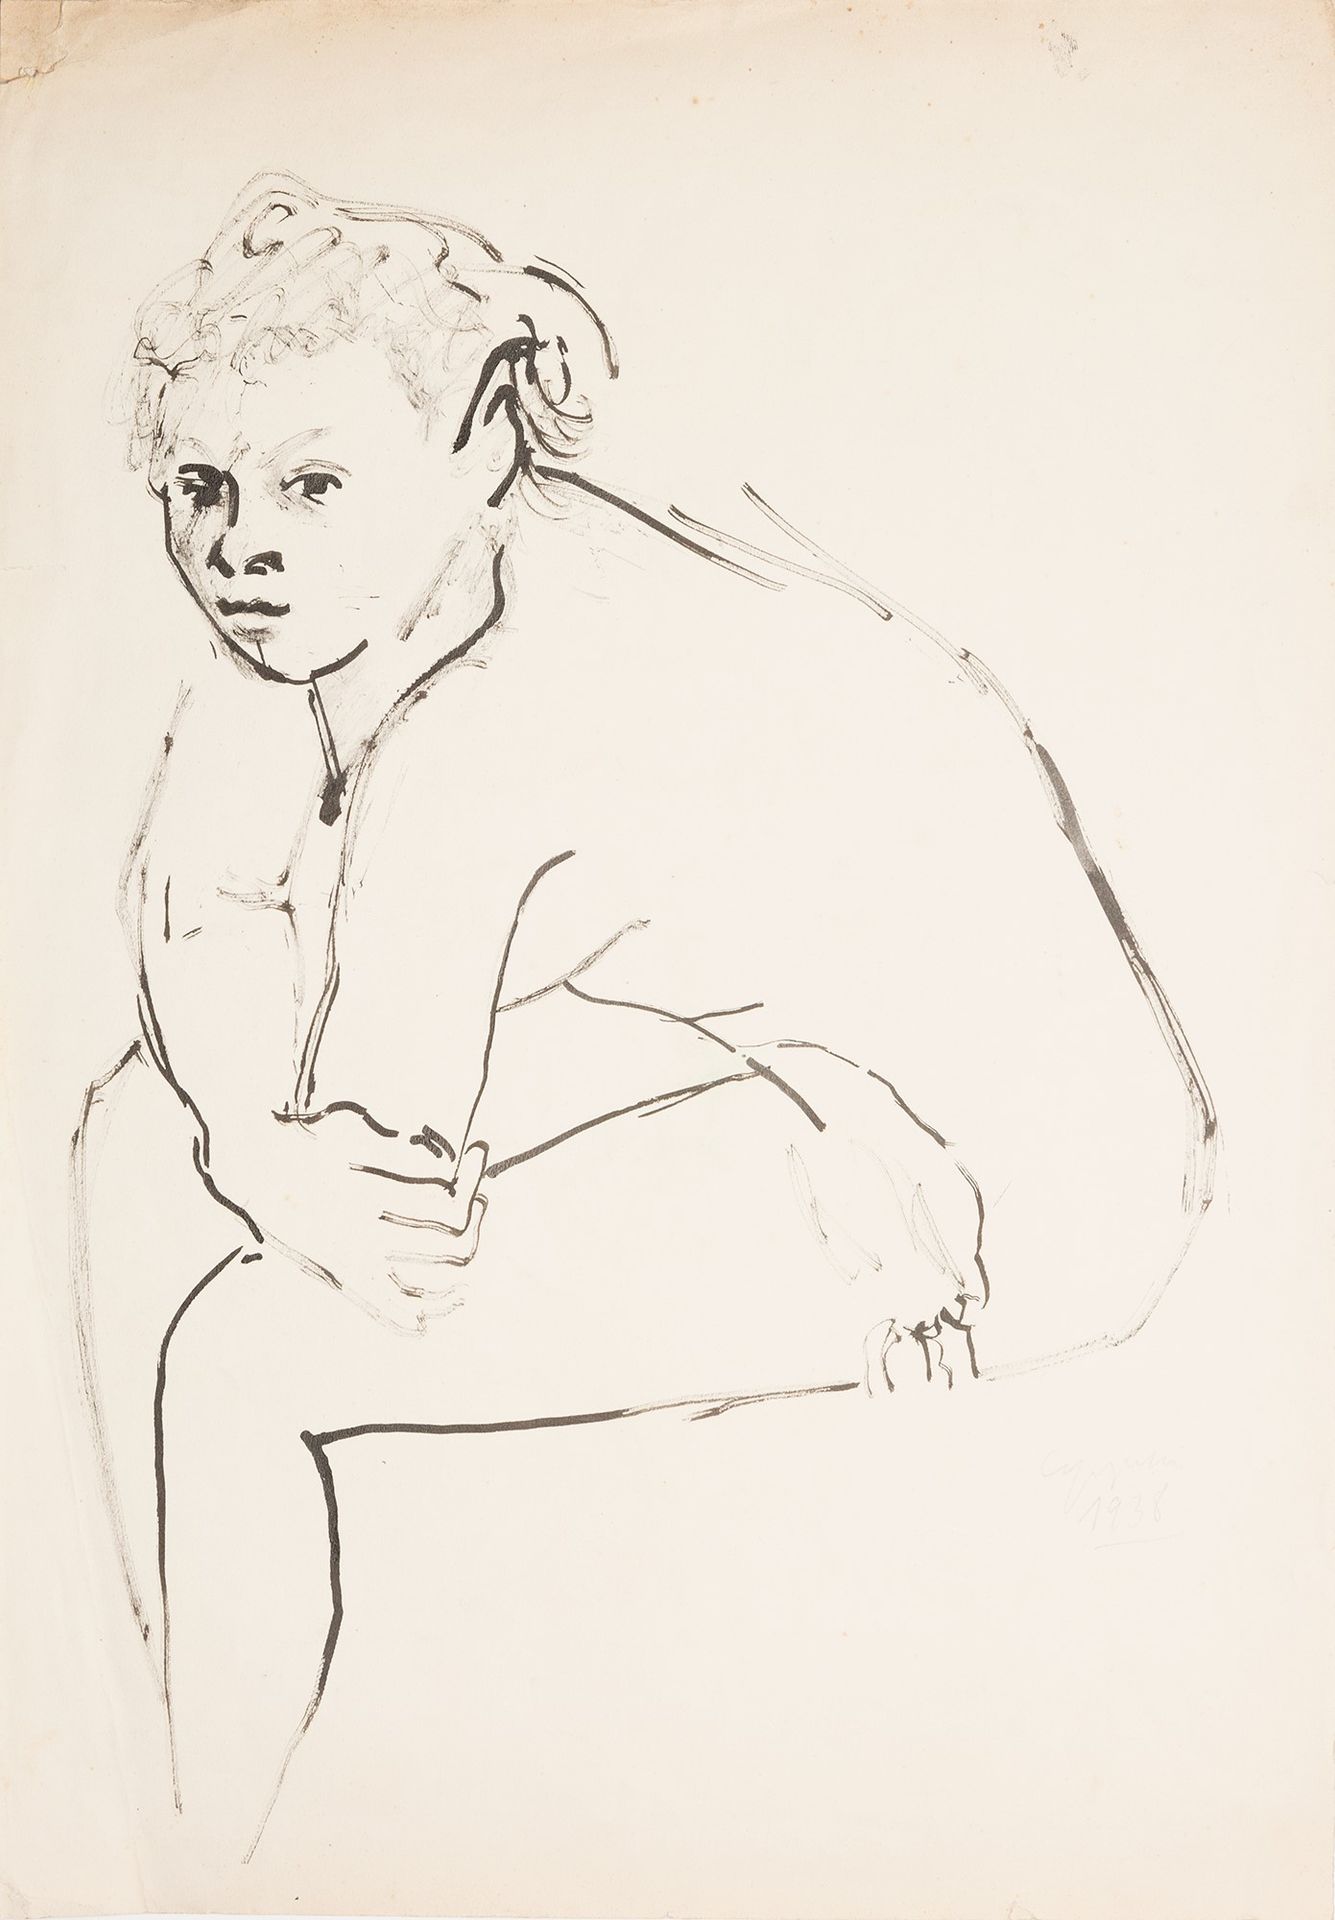 GIUSEPPE CAPOGROSSI 坐着的女人，1940/'41

稀释的中国墨水，纸质
50 x 35 cm
 

右下方有签名：Capogrossi 1&hellip;